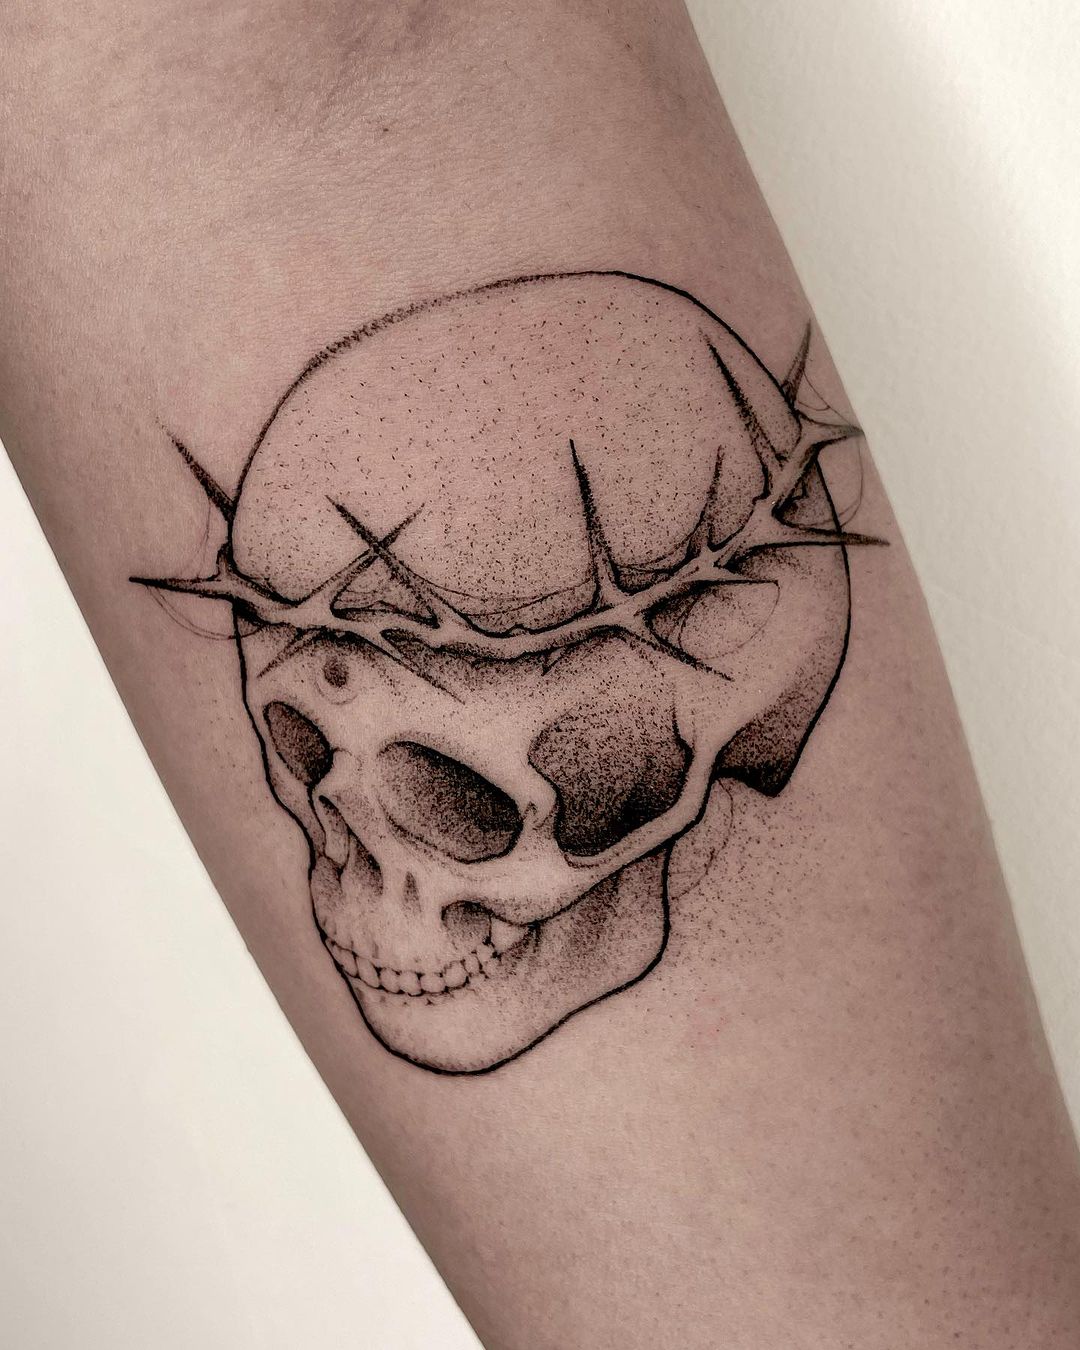 Skull tattoo on forearm by nauyaca ttt